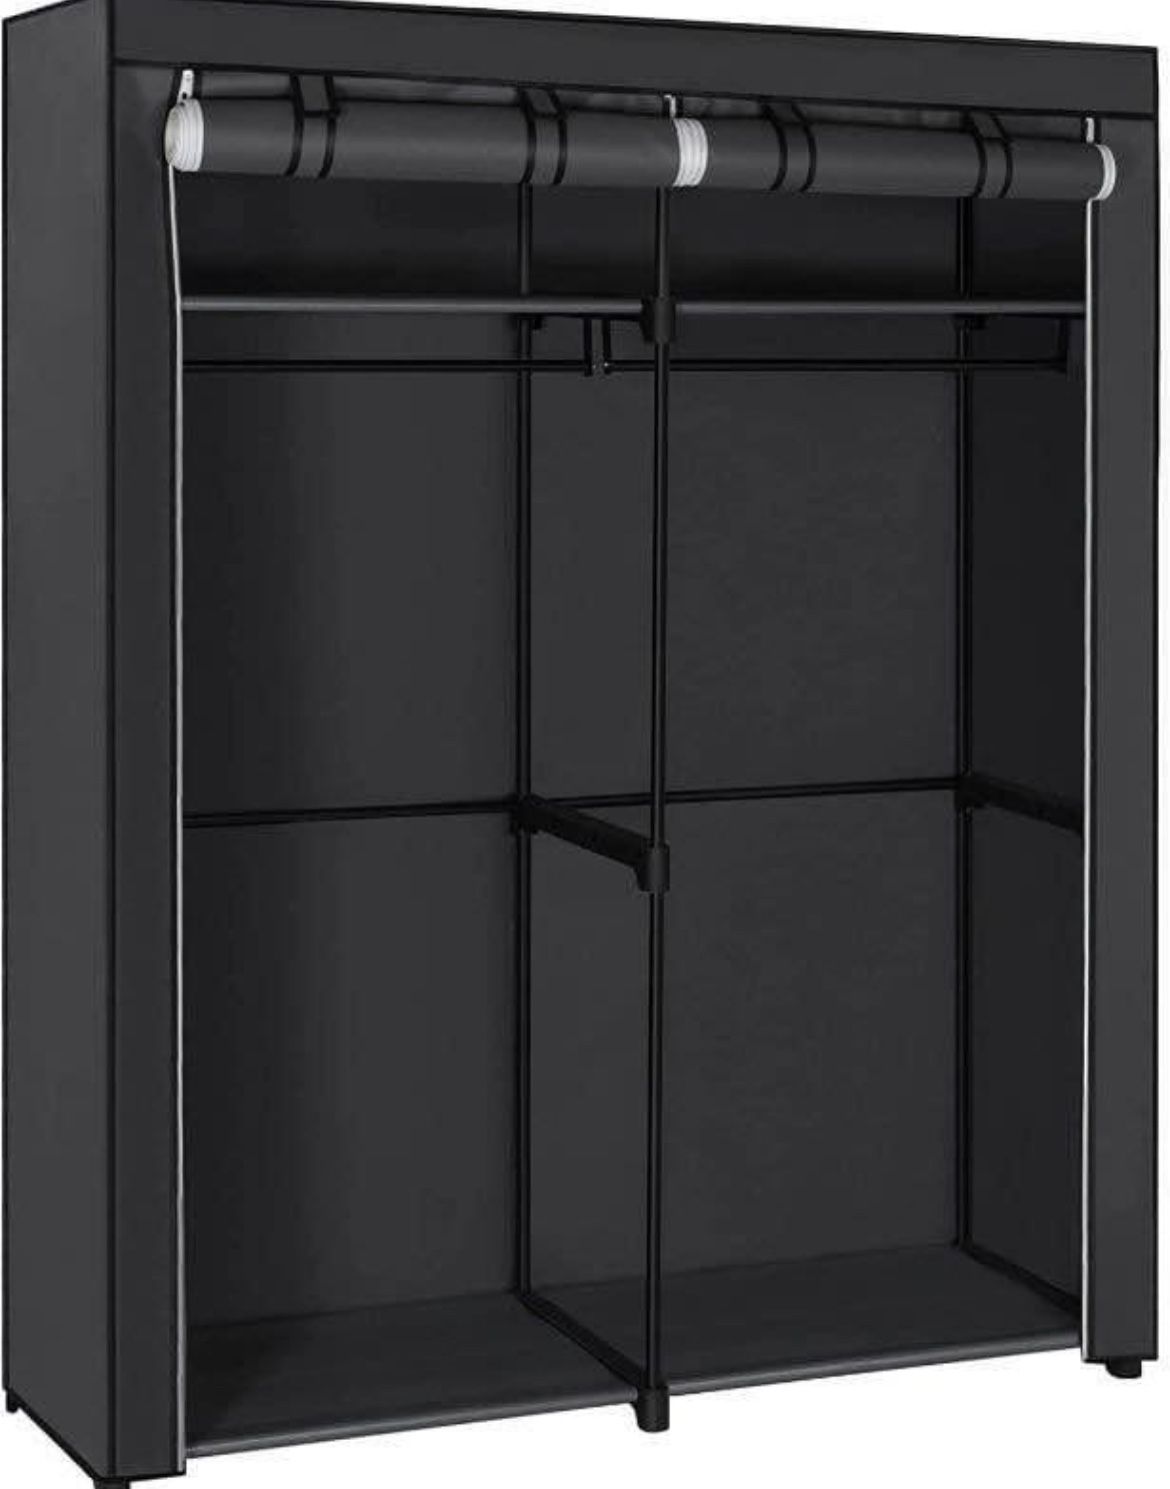 NEW IN BOX - Black Closet Wardrobe/Portable Closet